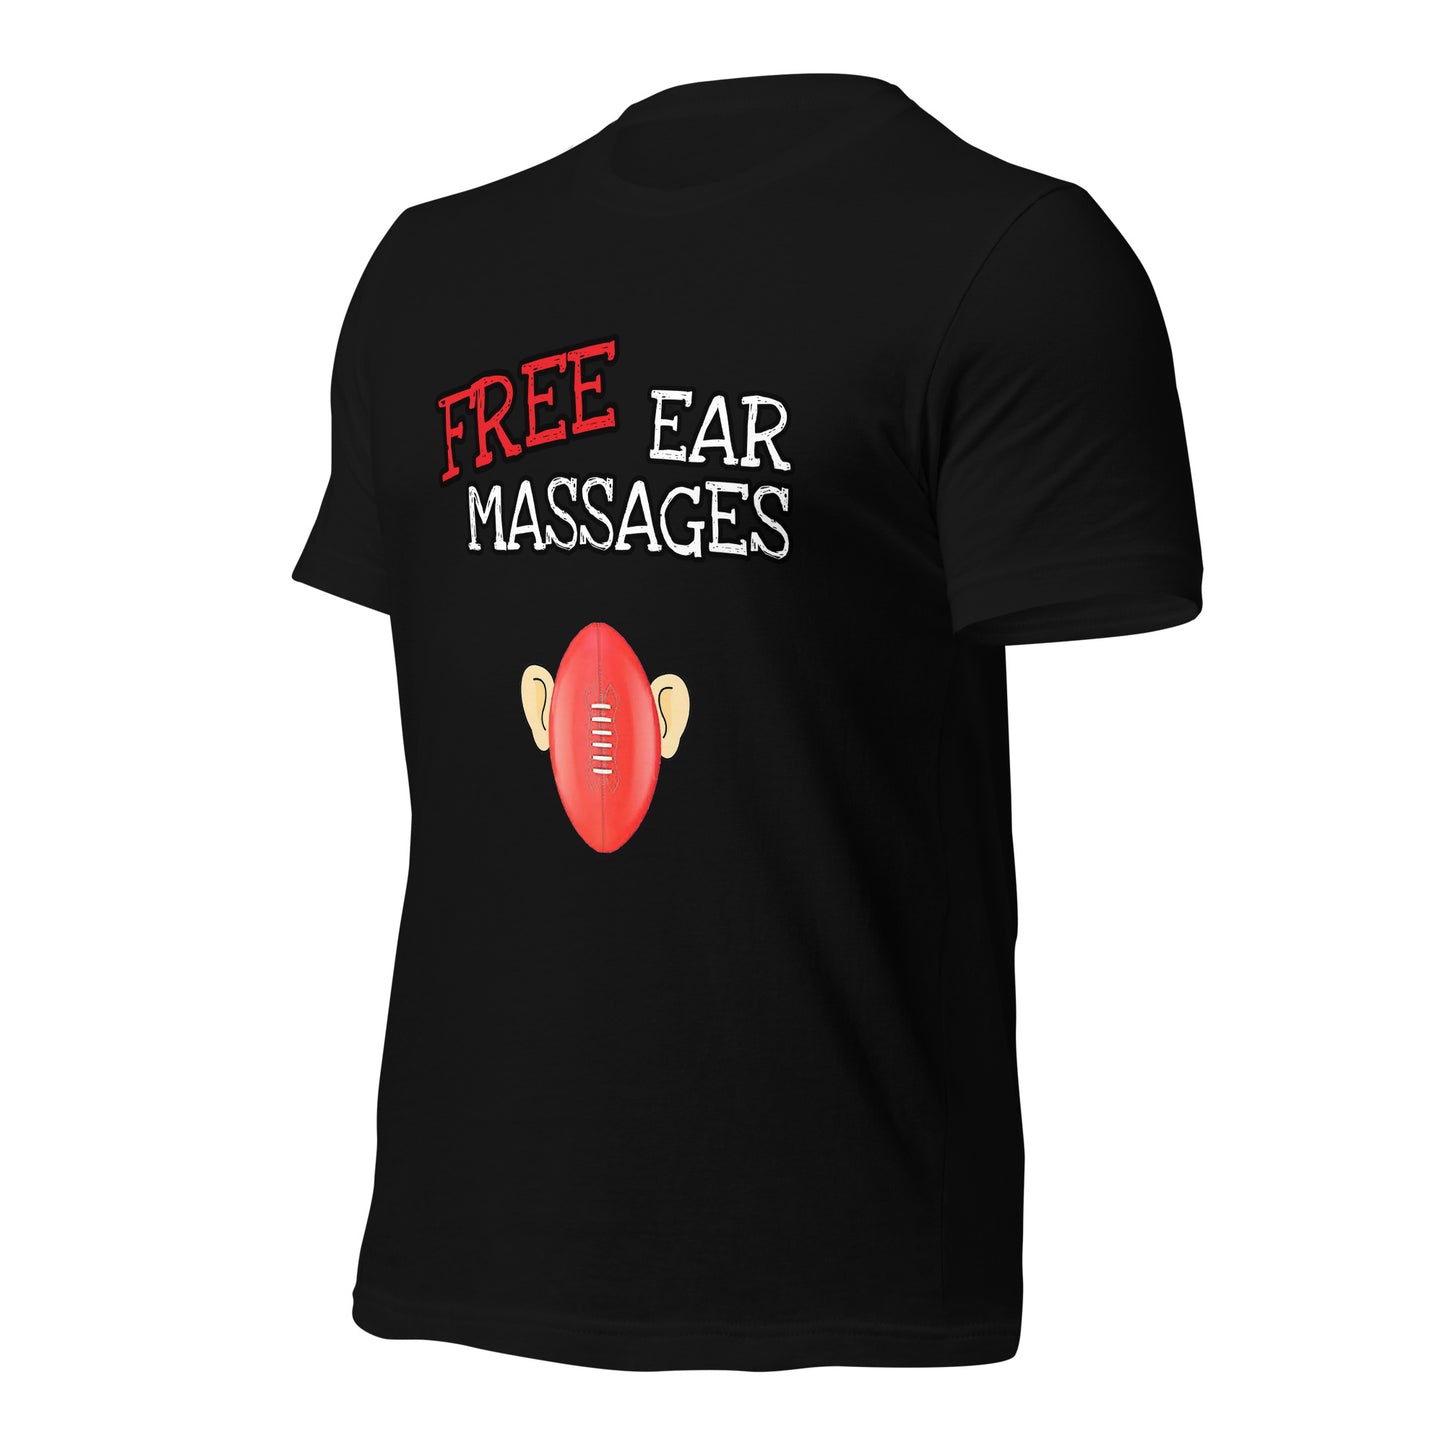 Free ear massages